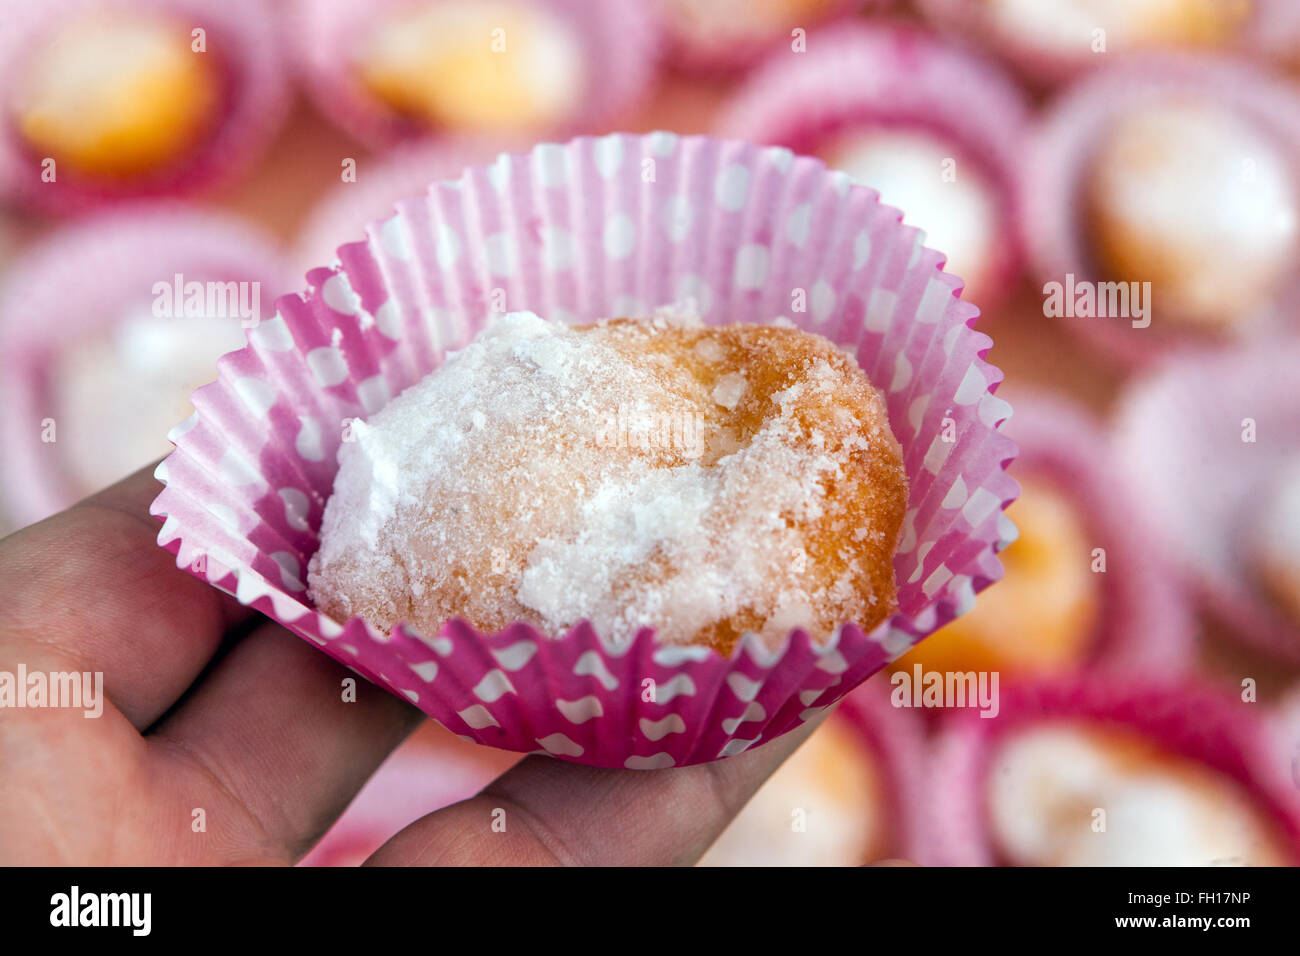 Czech homemade sweet little doughnuts in paper cases Stock Photo